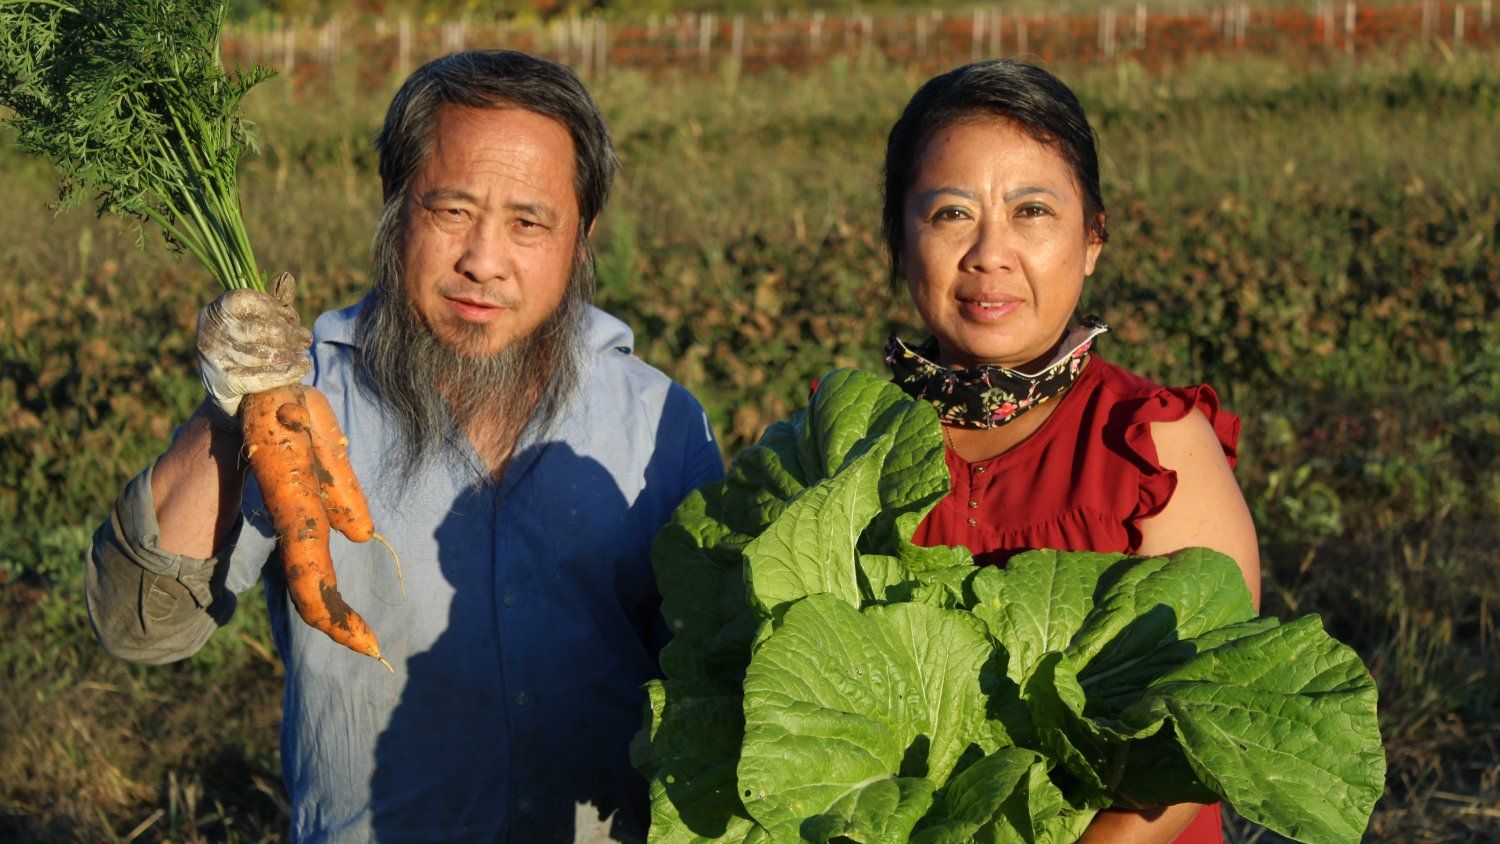 Previous Happening: Meet Farmers Lue & Kia